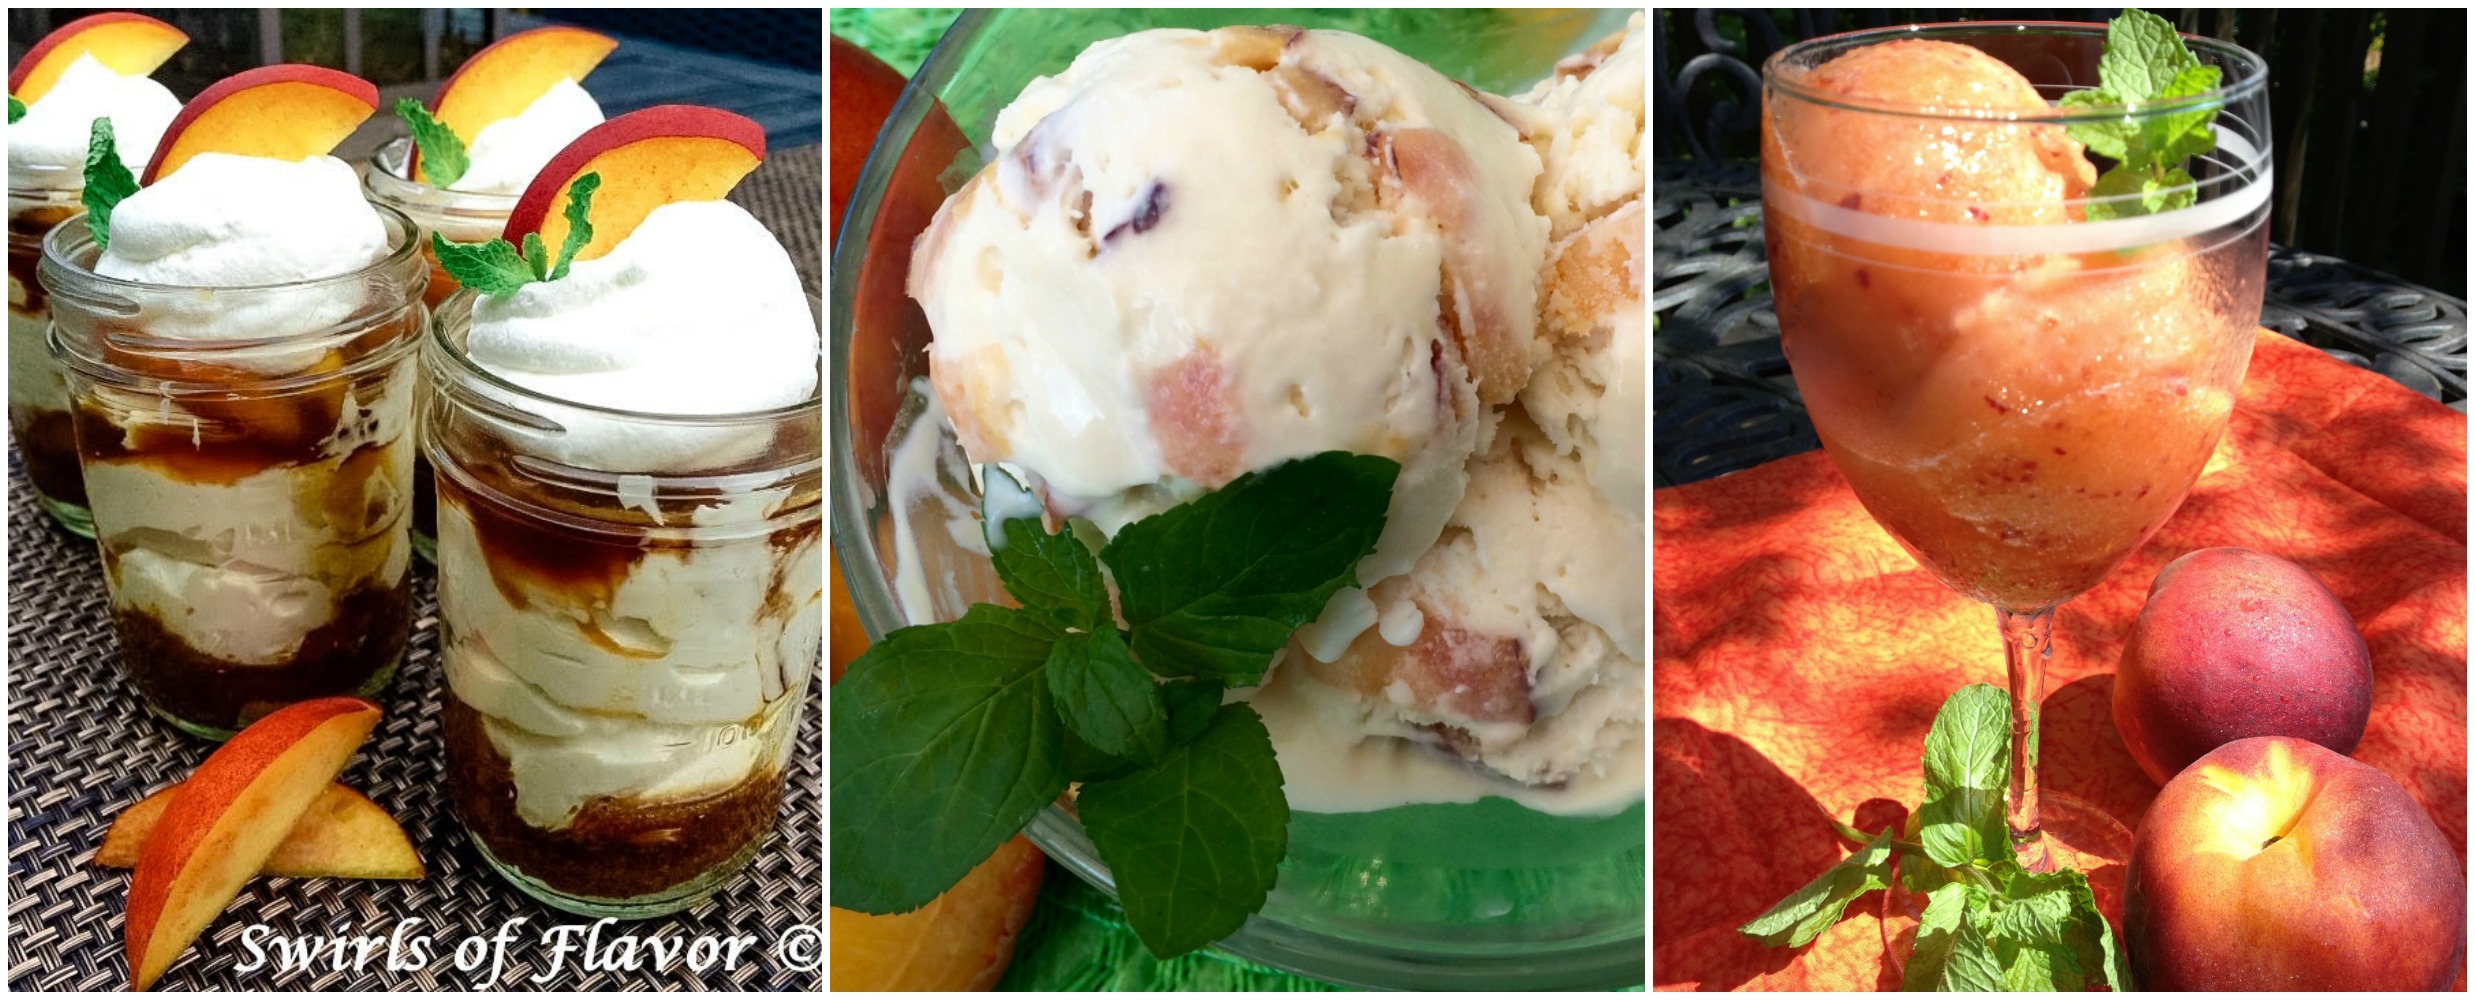 Left to right: Peach Cheesecake Mousse; Peach Ice Cream; Peach Sorbet